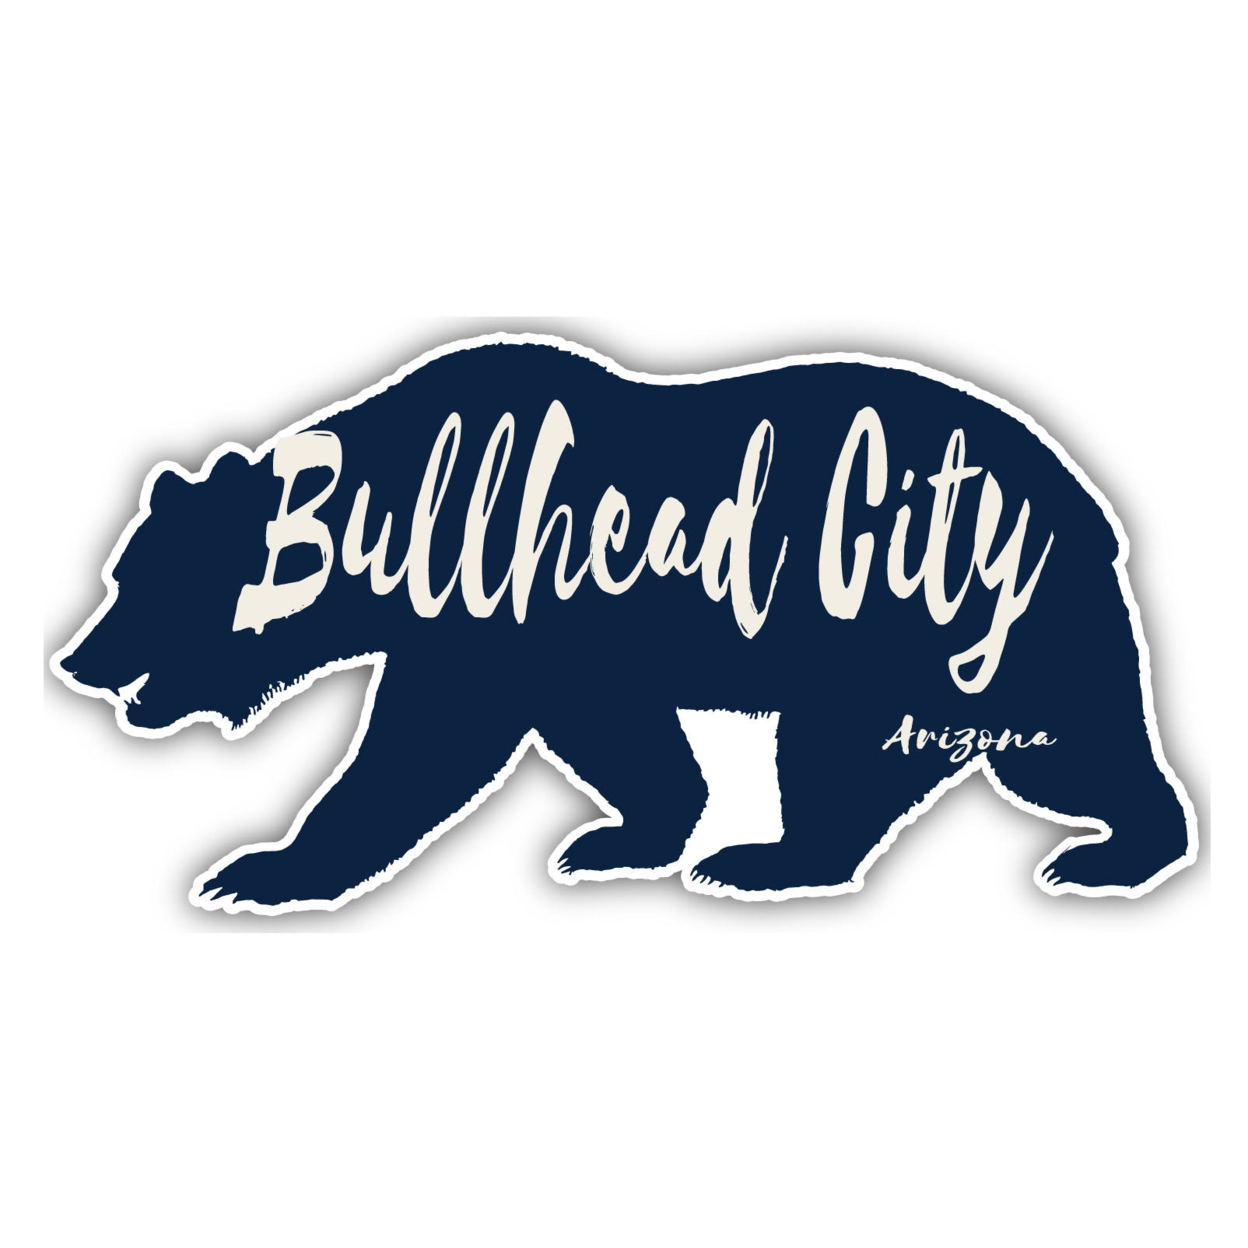 Bullhead City Arizona Souvenir Decorative Stickers (Choose Theme And Size) - 4-Pack, 10-Inch, Bear